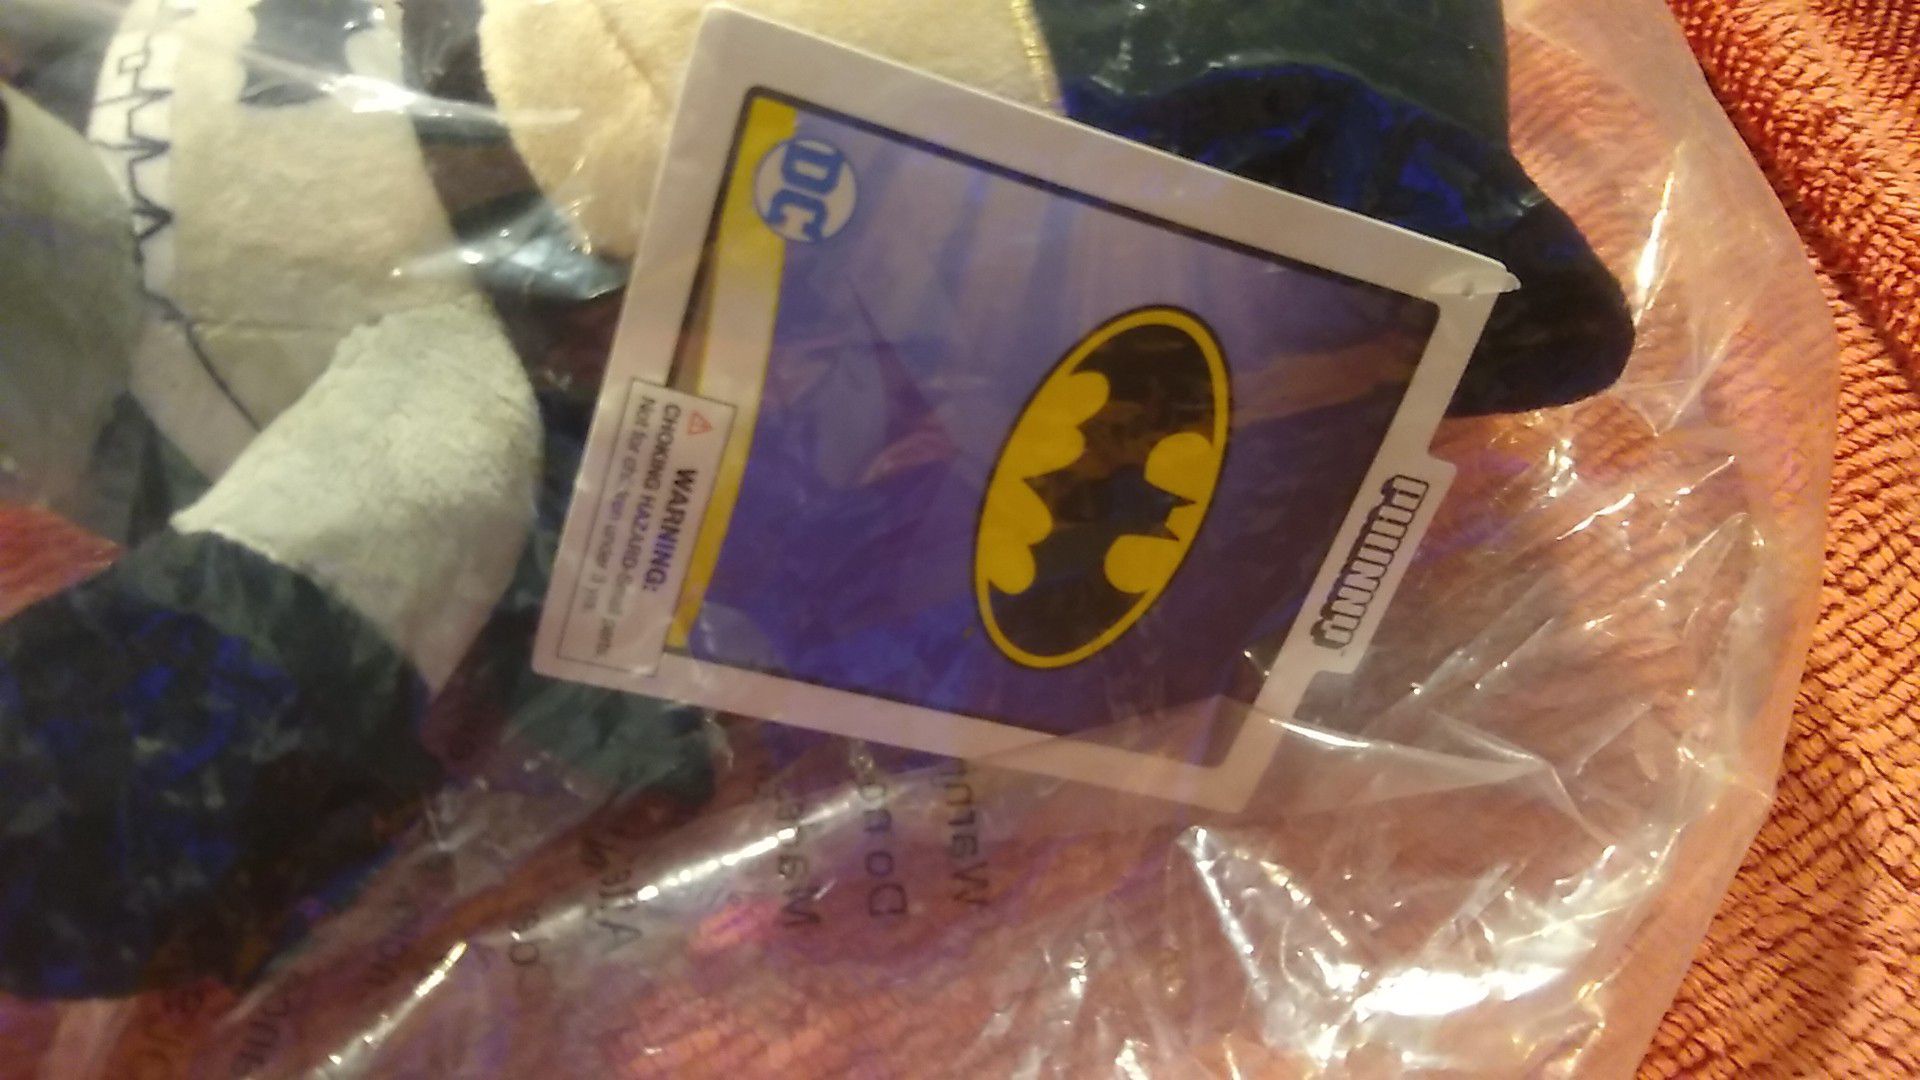 Batman plushie